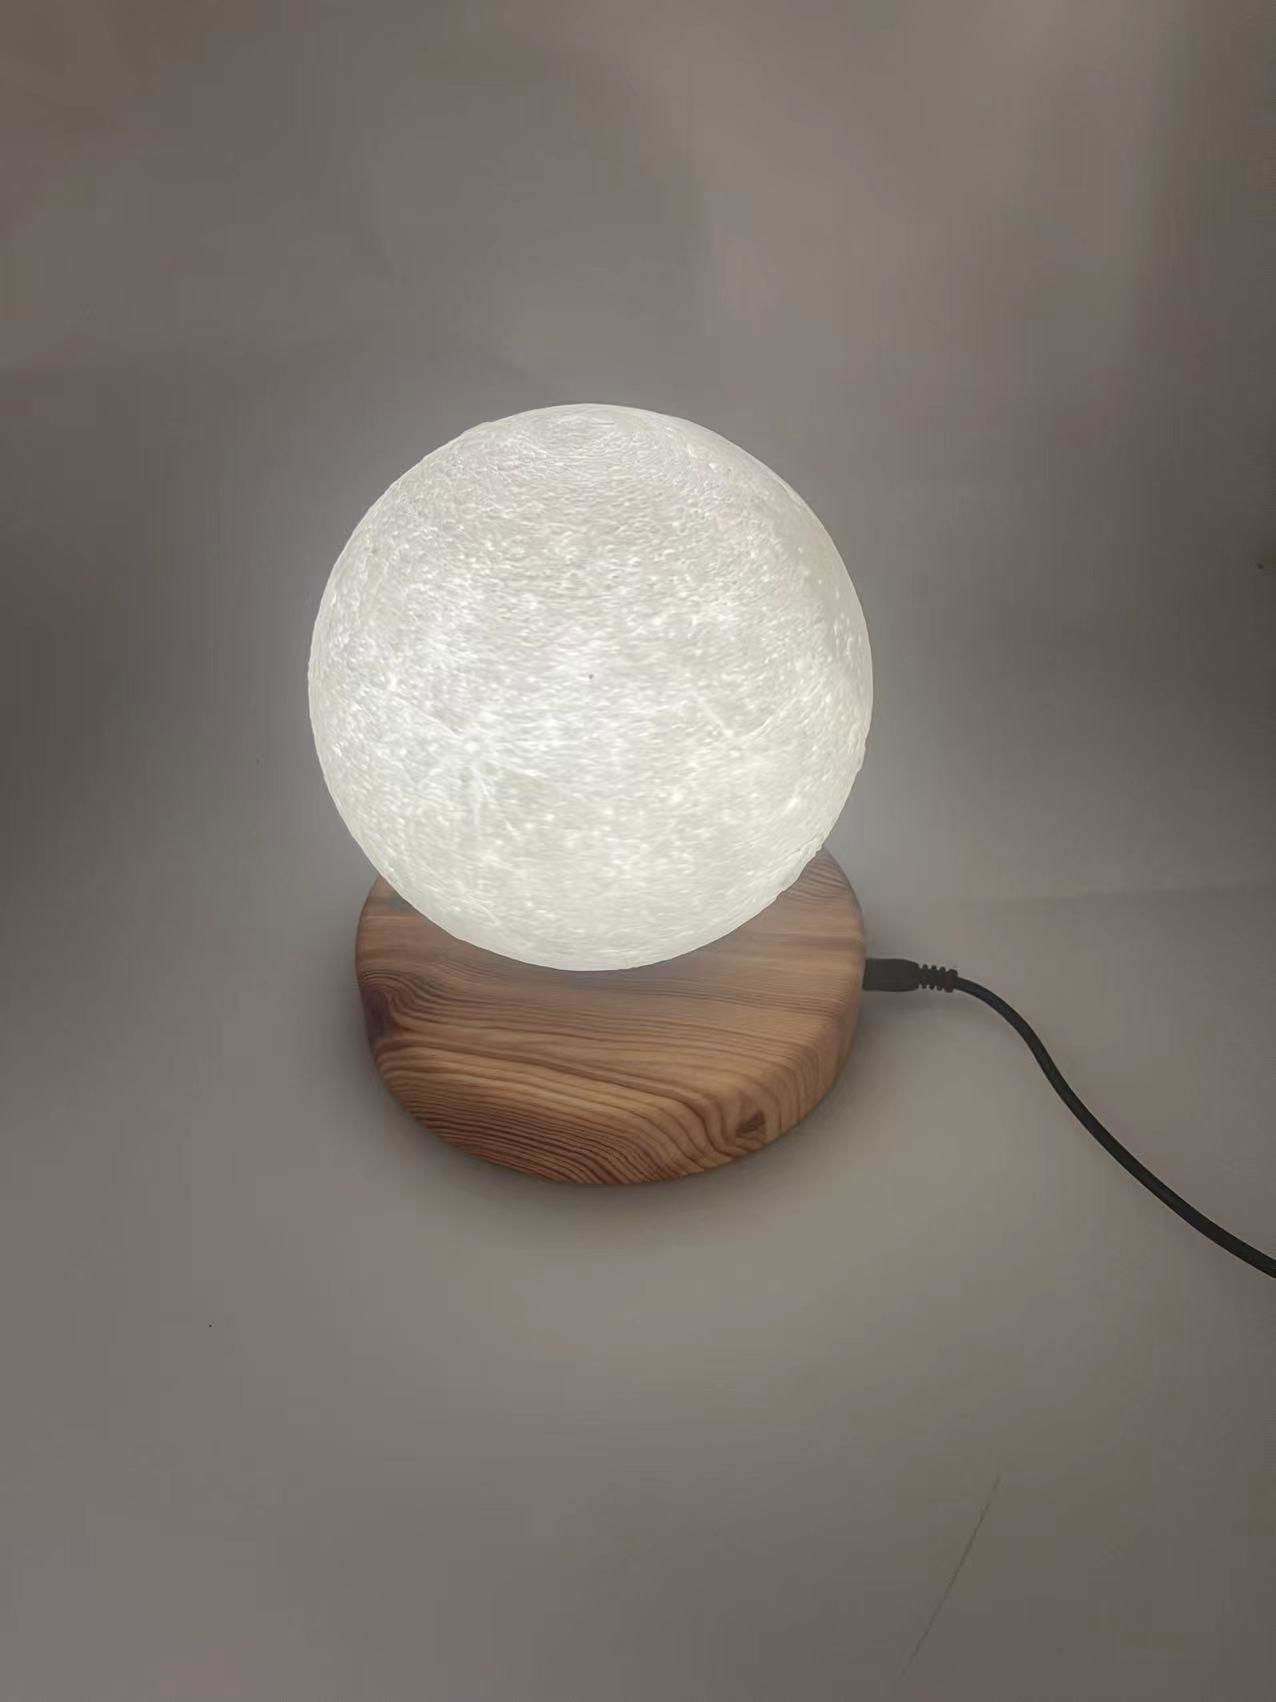 360 spinning magnetic floating levitaiton desk moon night light  5